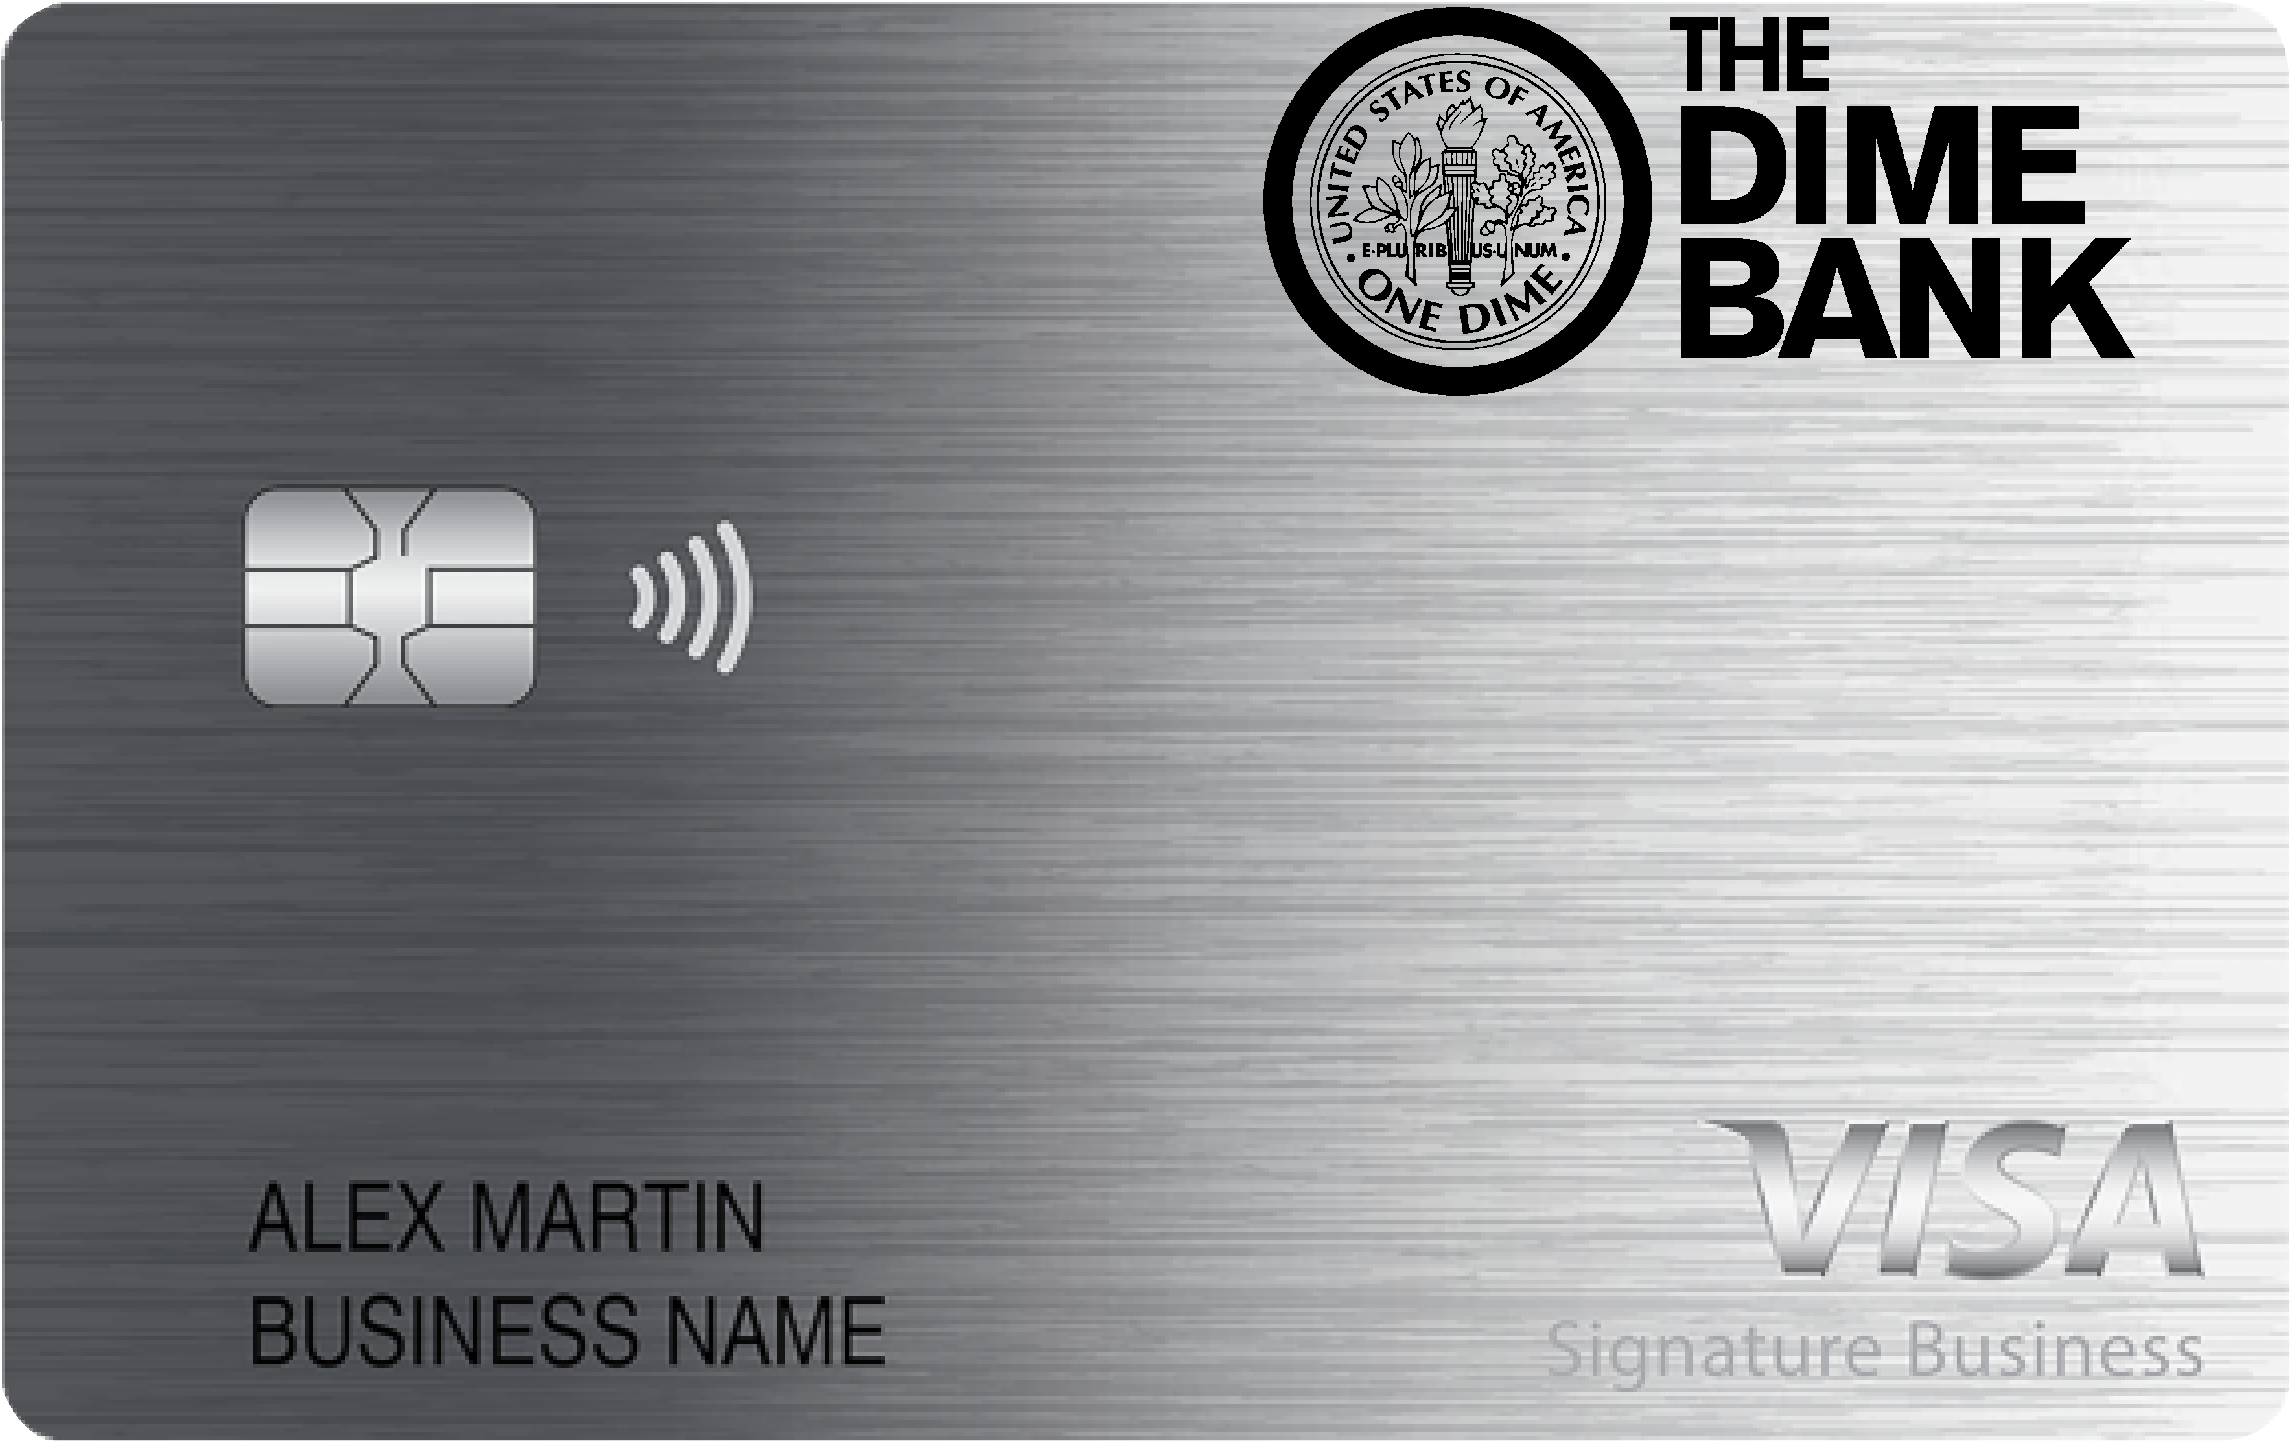 The Dime Bank Smart Business Rewards Card